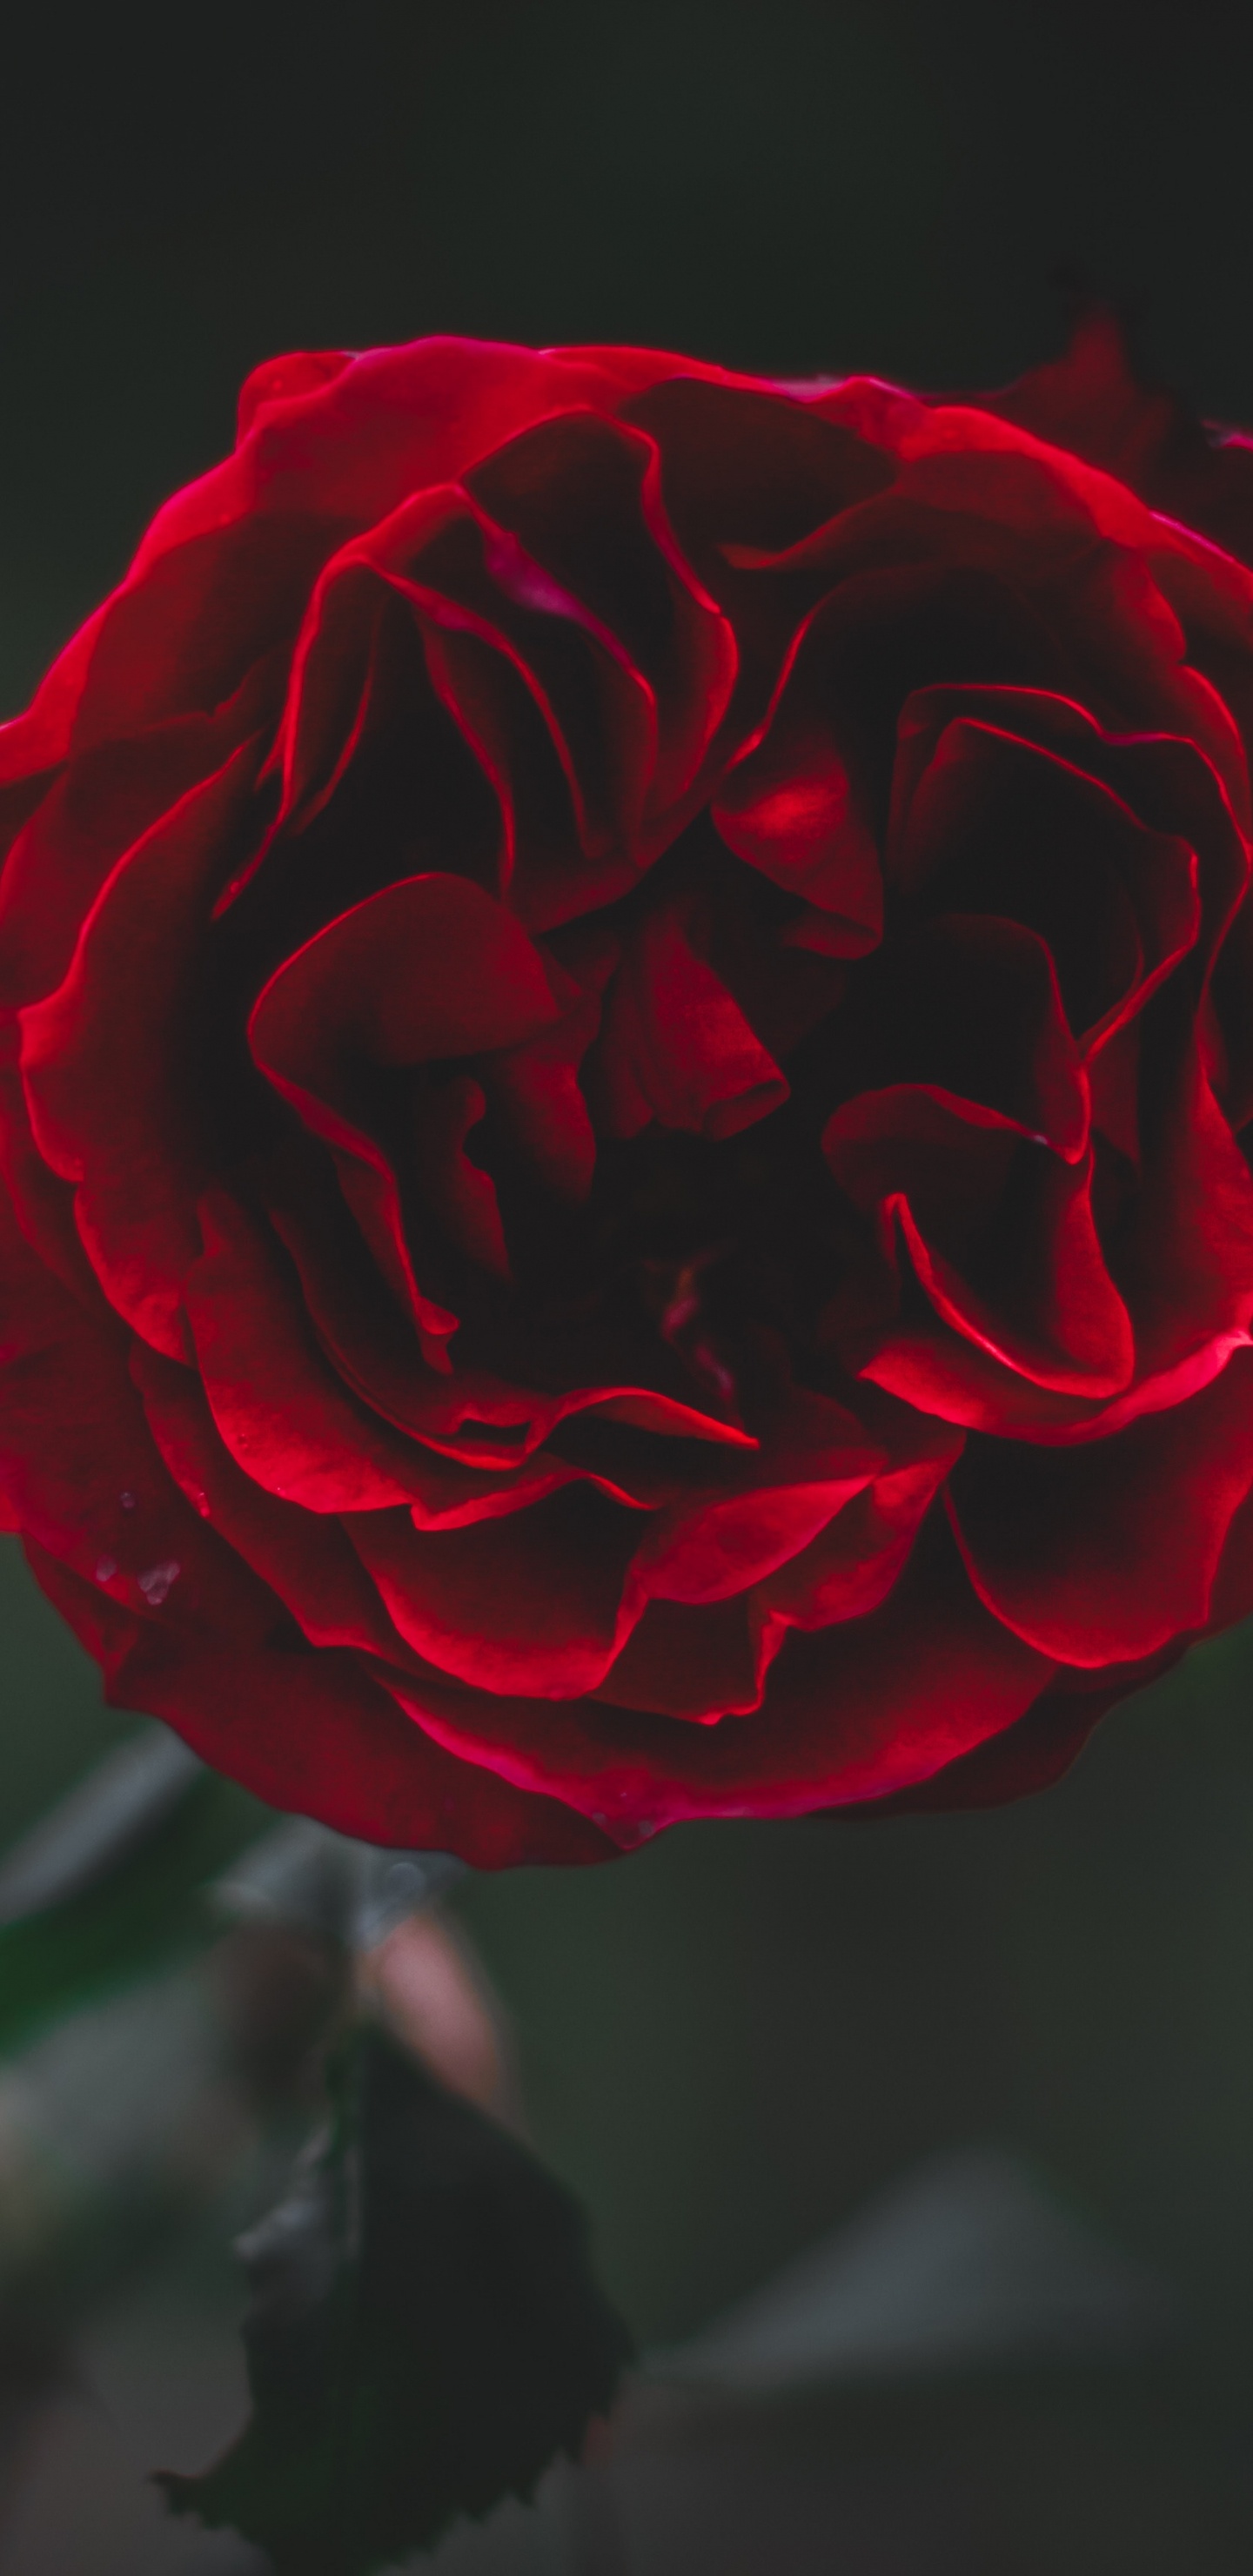 Rose Rouge en Fleur en Photographie Rapprochée. Wallpaper in 1440x2960 Resolution